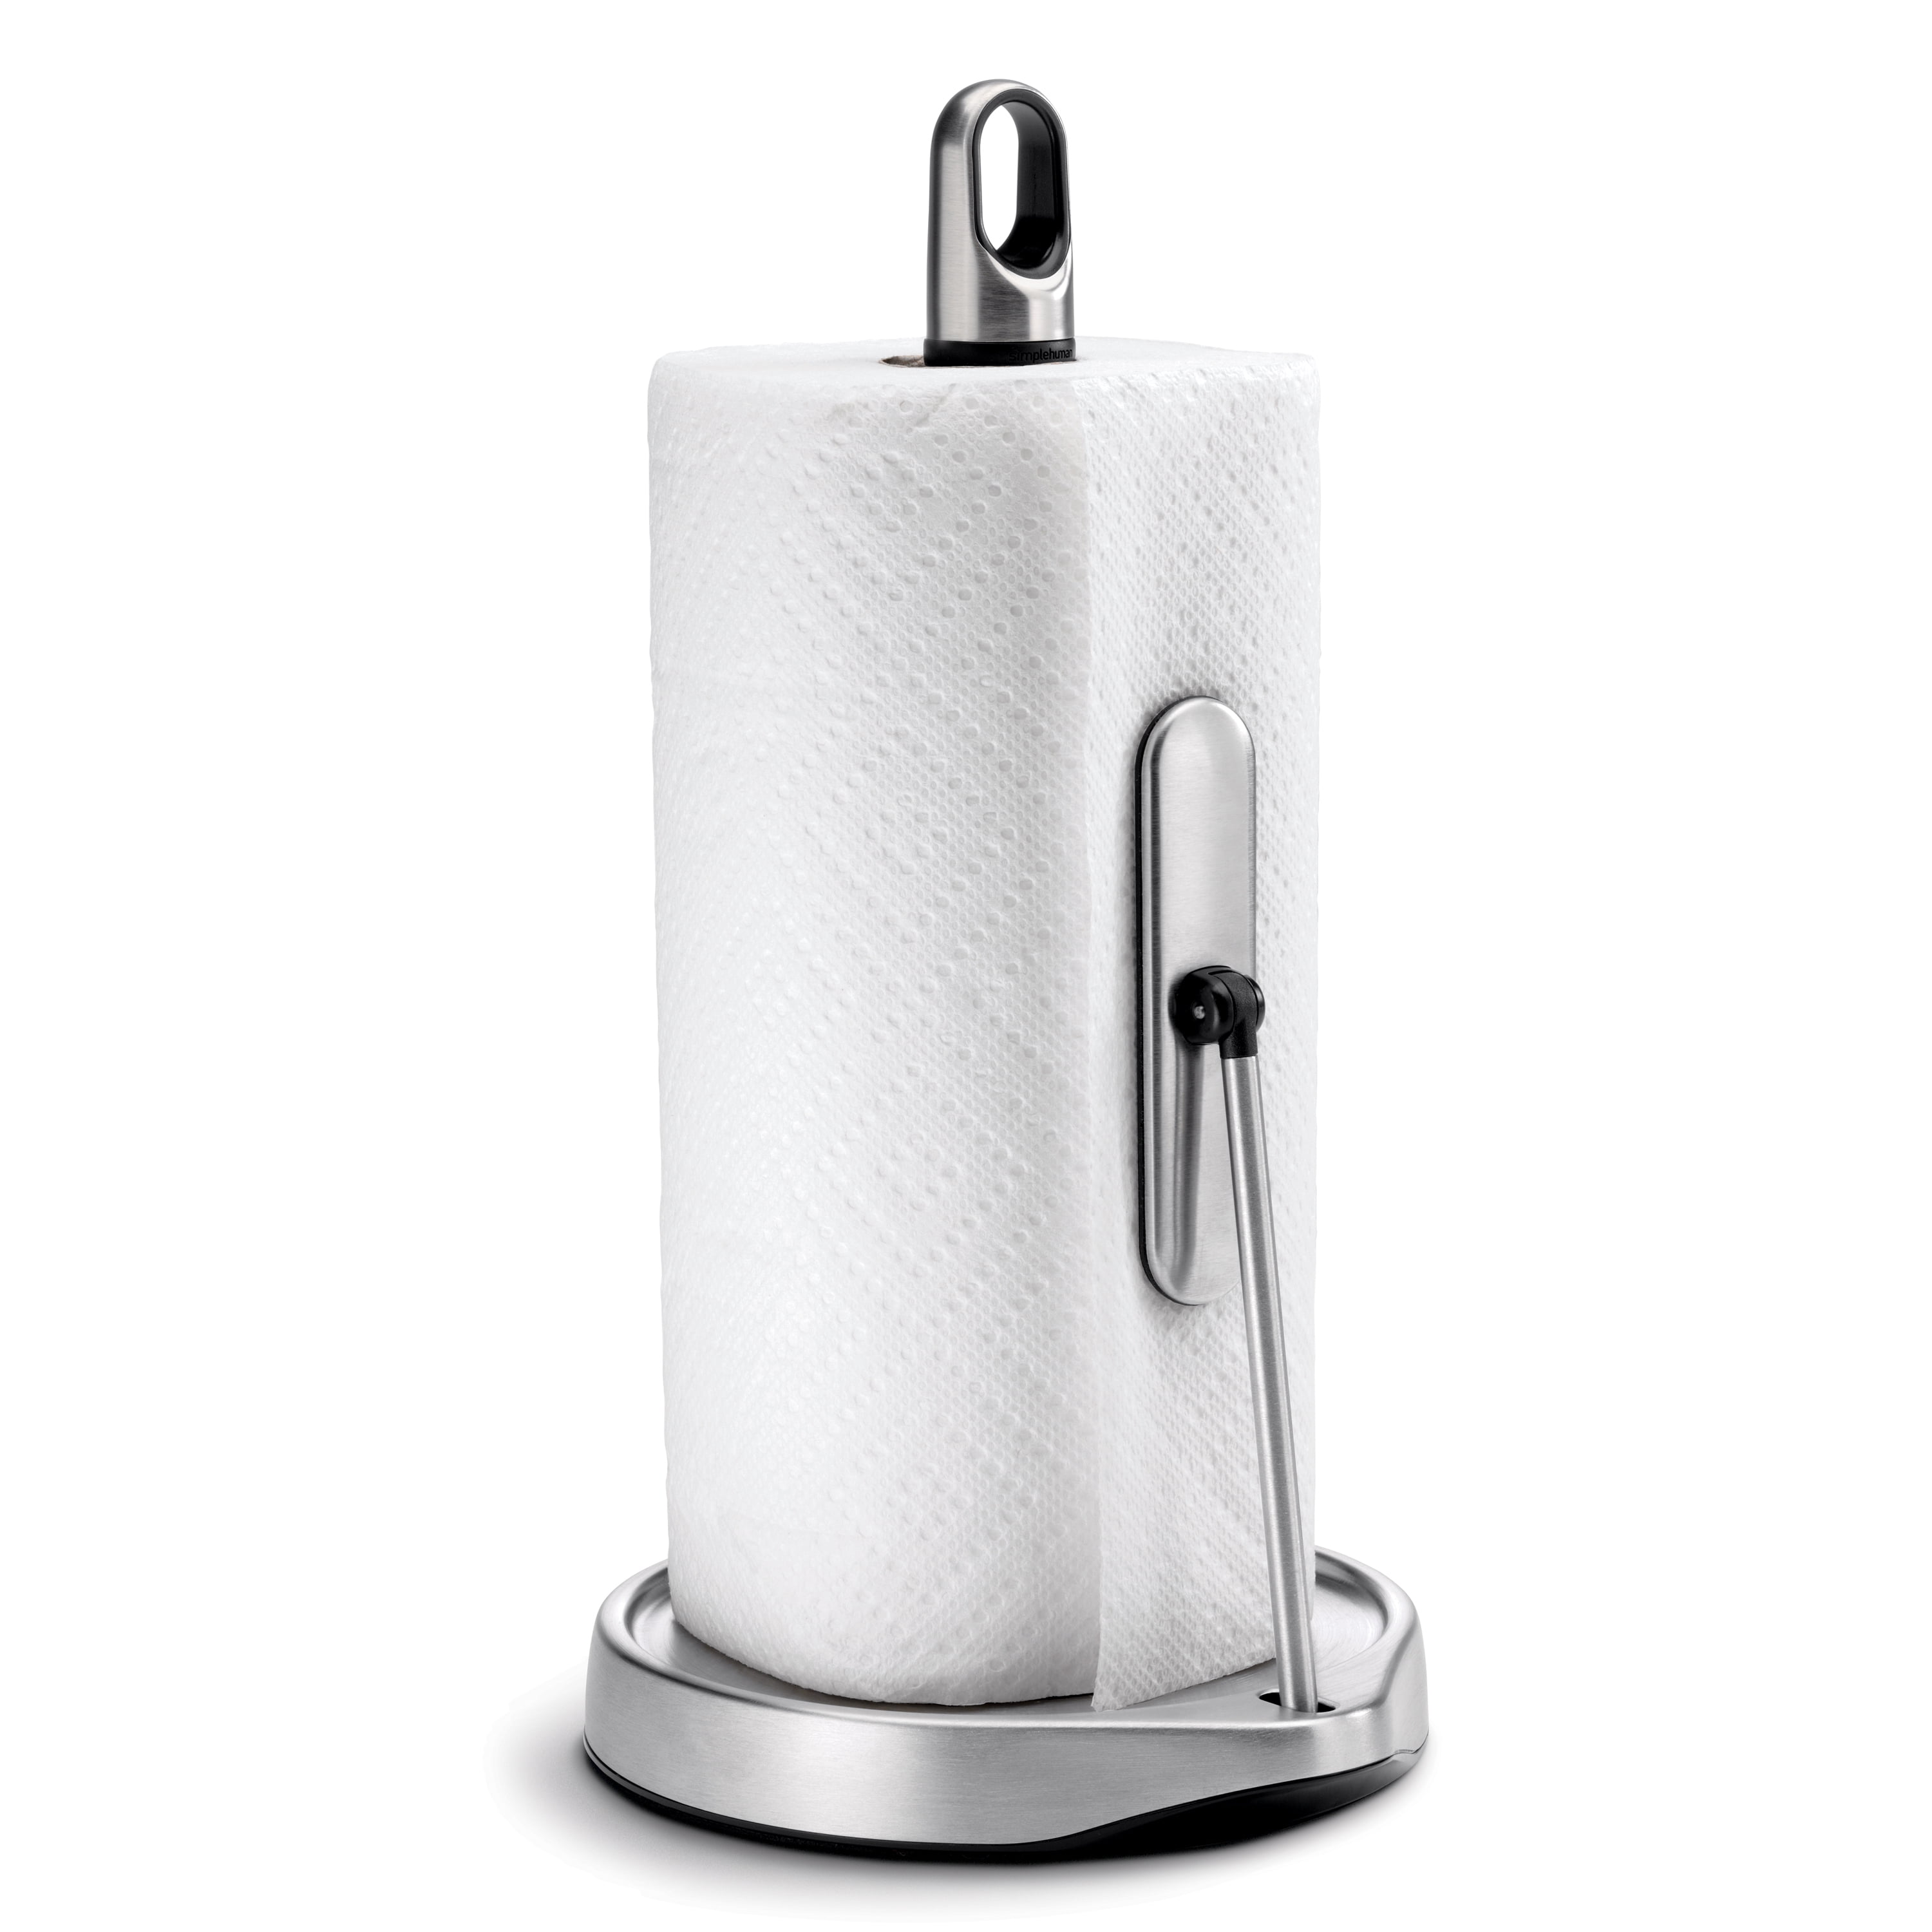 simplehuman® KT1024 S/S Wall Mount Paper Towel Holder